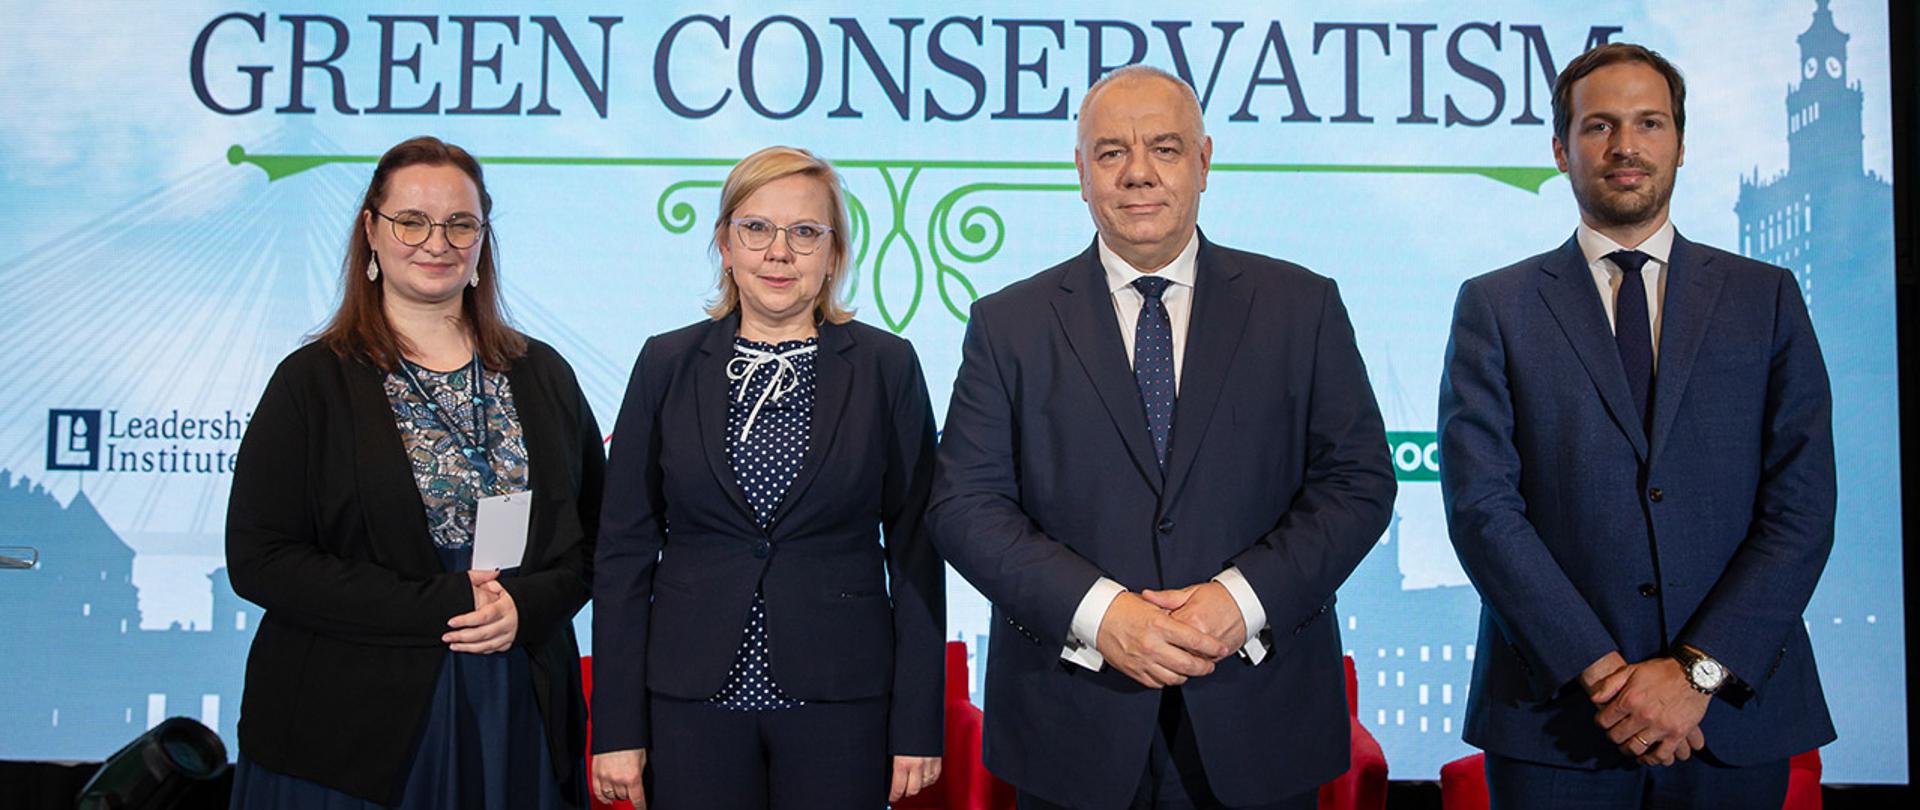 Wicepremier Jacek Sasin, minister Anna Moskwa i organizatorzy stoją na tle ekranu z napisem Green Conservatism.